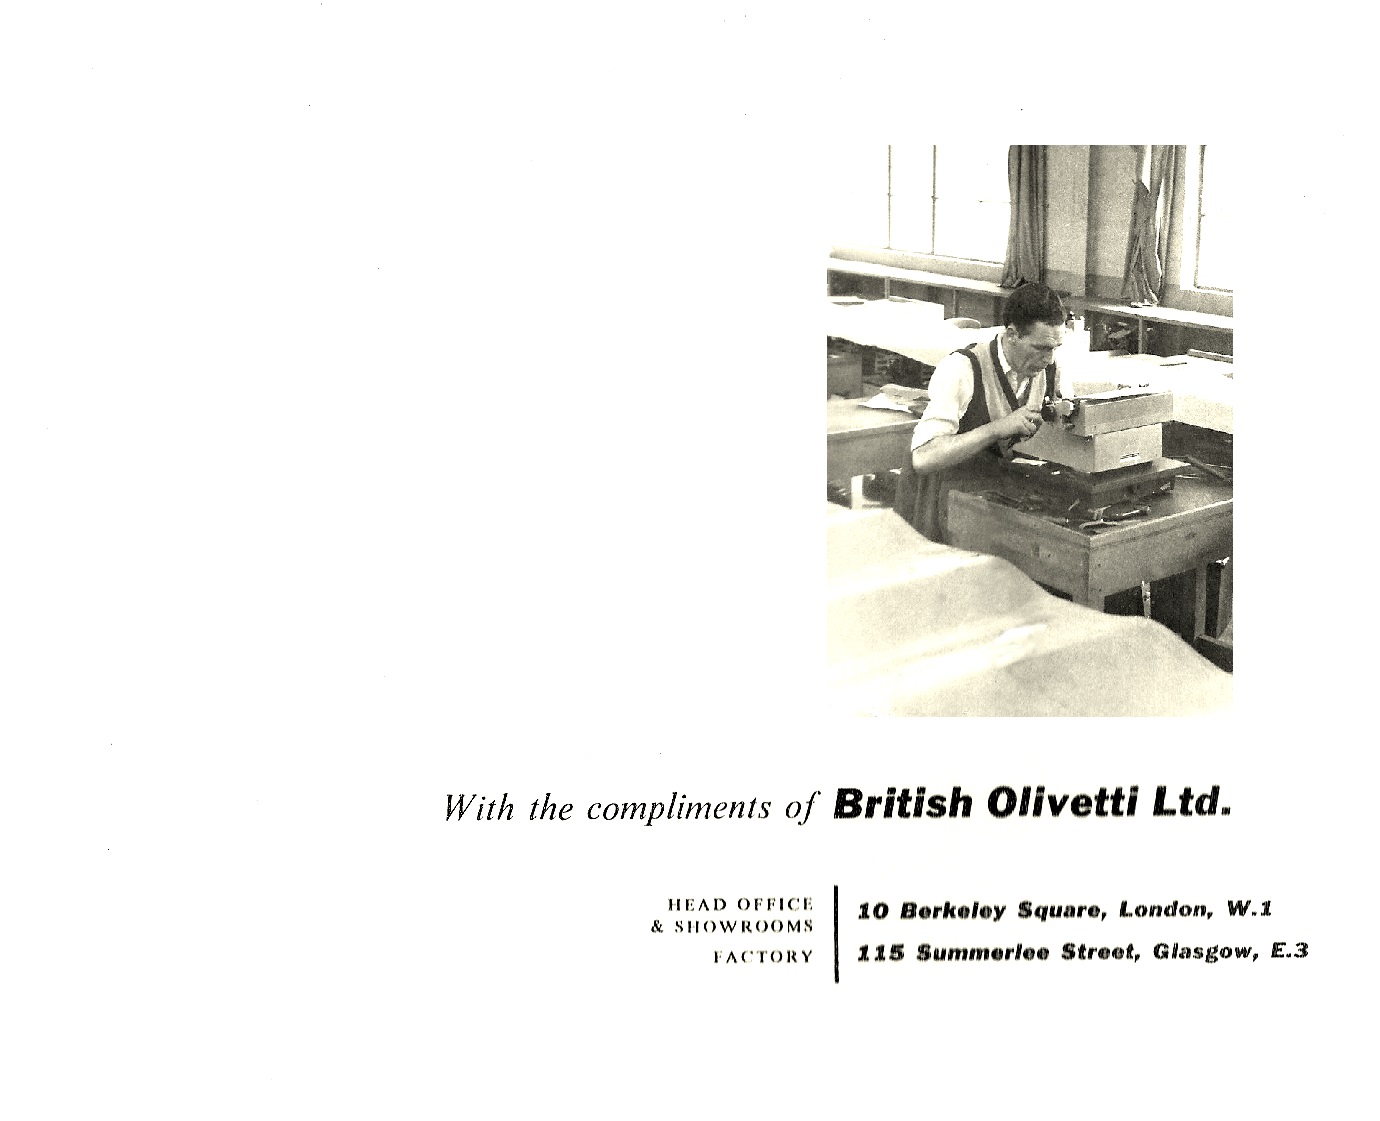 British Olivetti factory in Glasgow